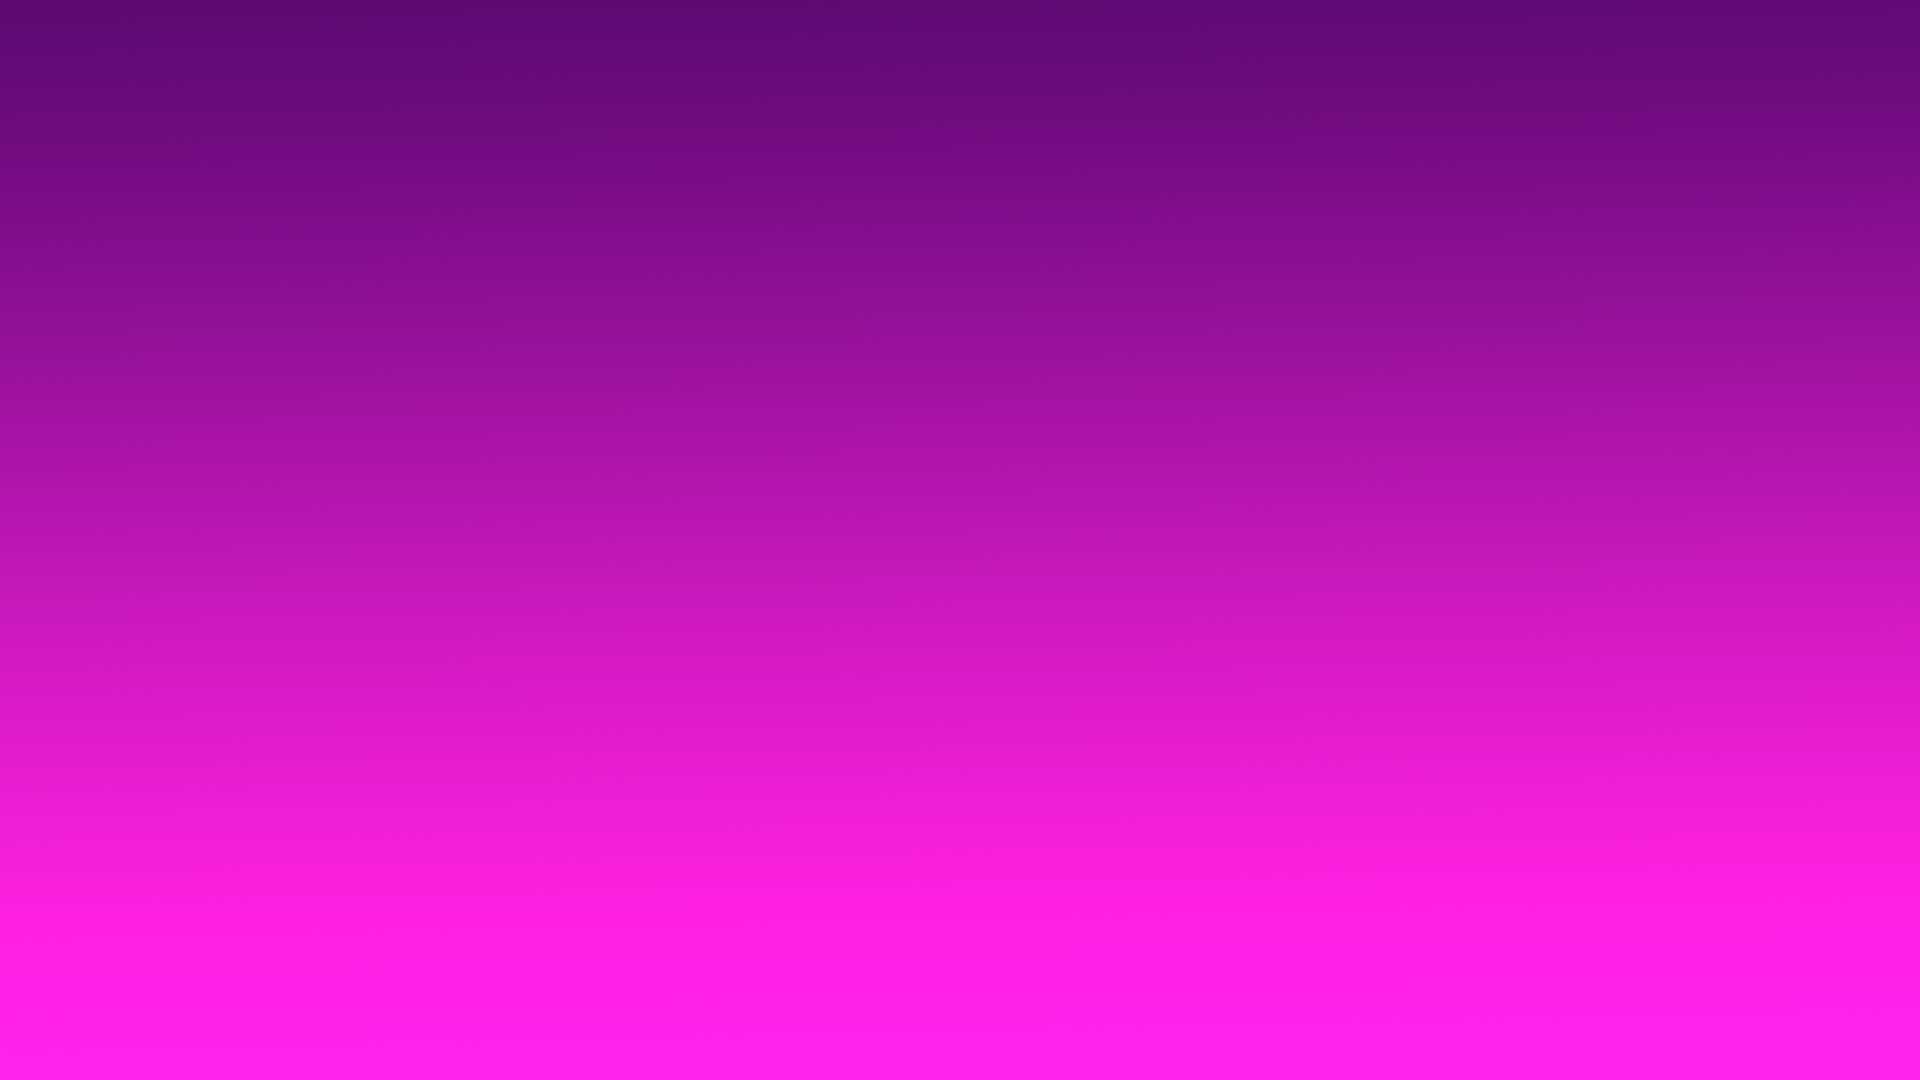 48+] Pink And Purple Ombre Wallpaper - Wallpapersafari